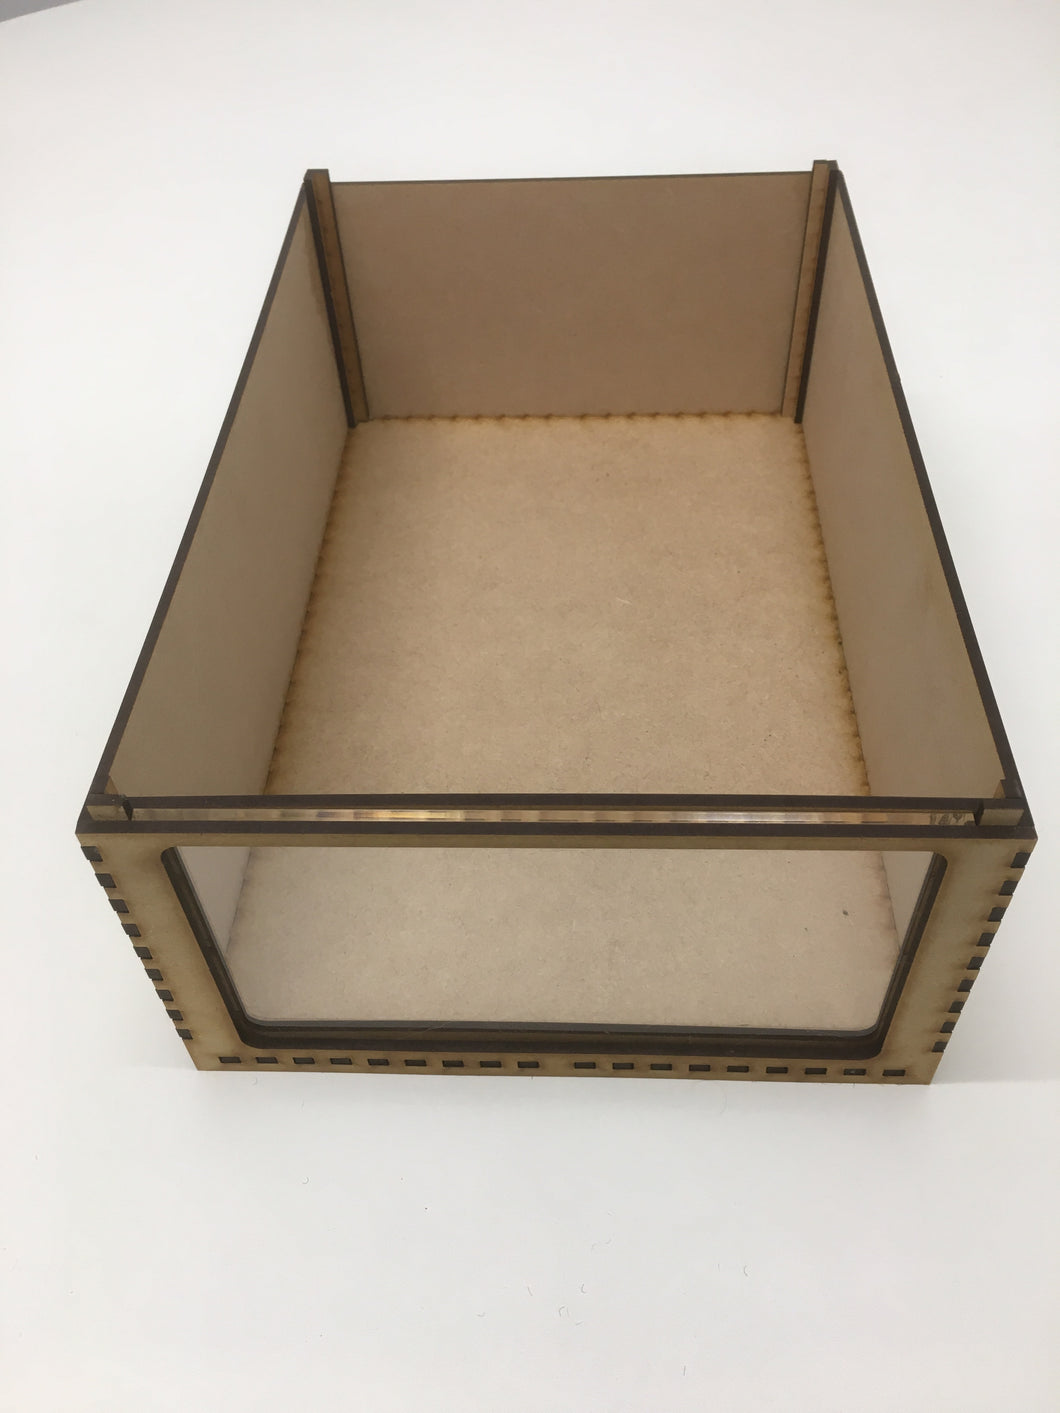 Miniature storage tray with clear acrylic window - 125mm